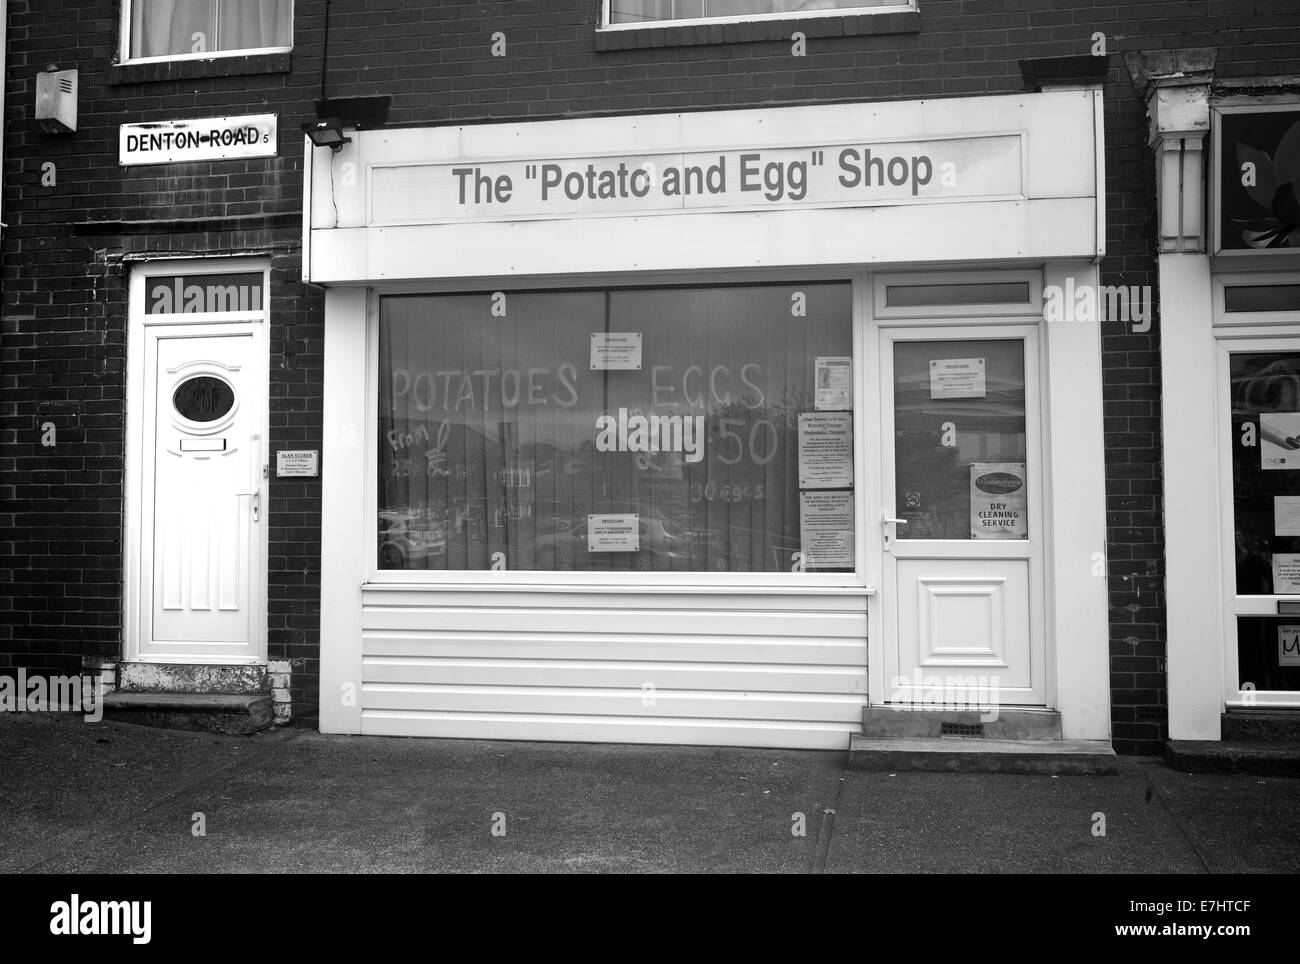 The Potato and Egg Shop Stock Photo